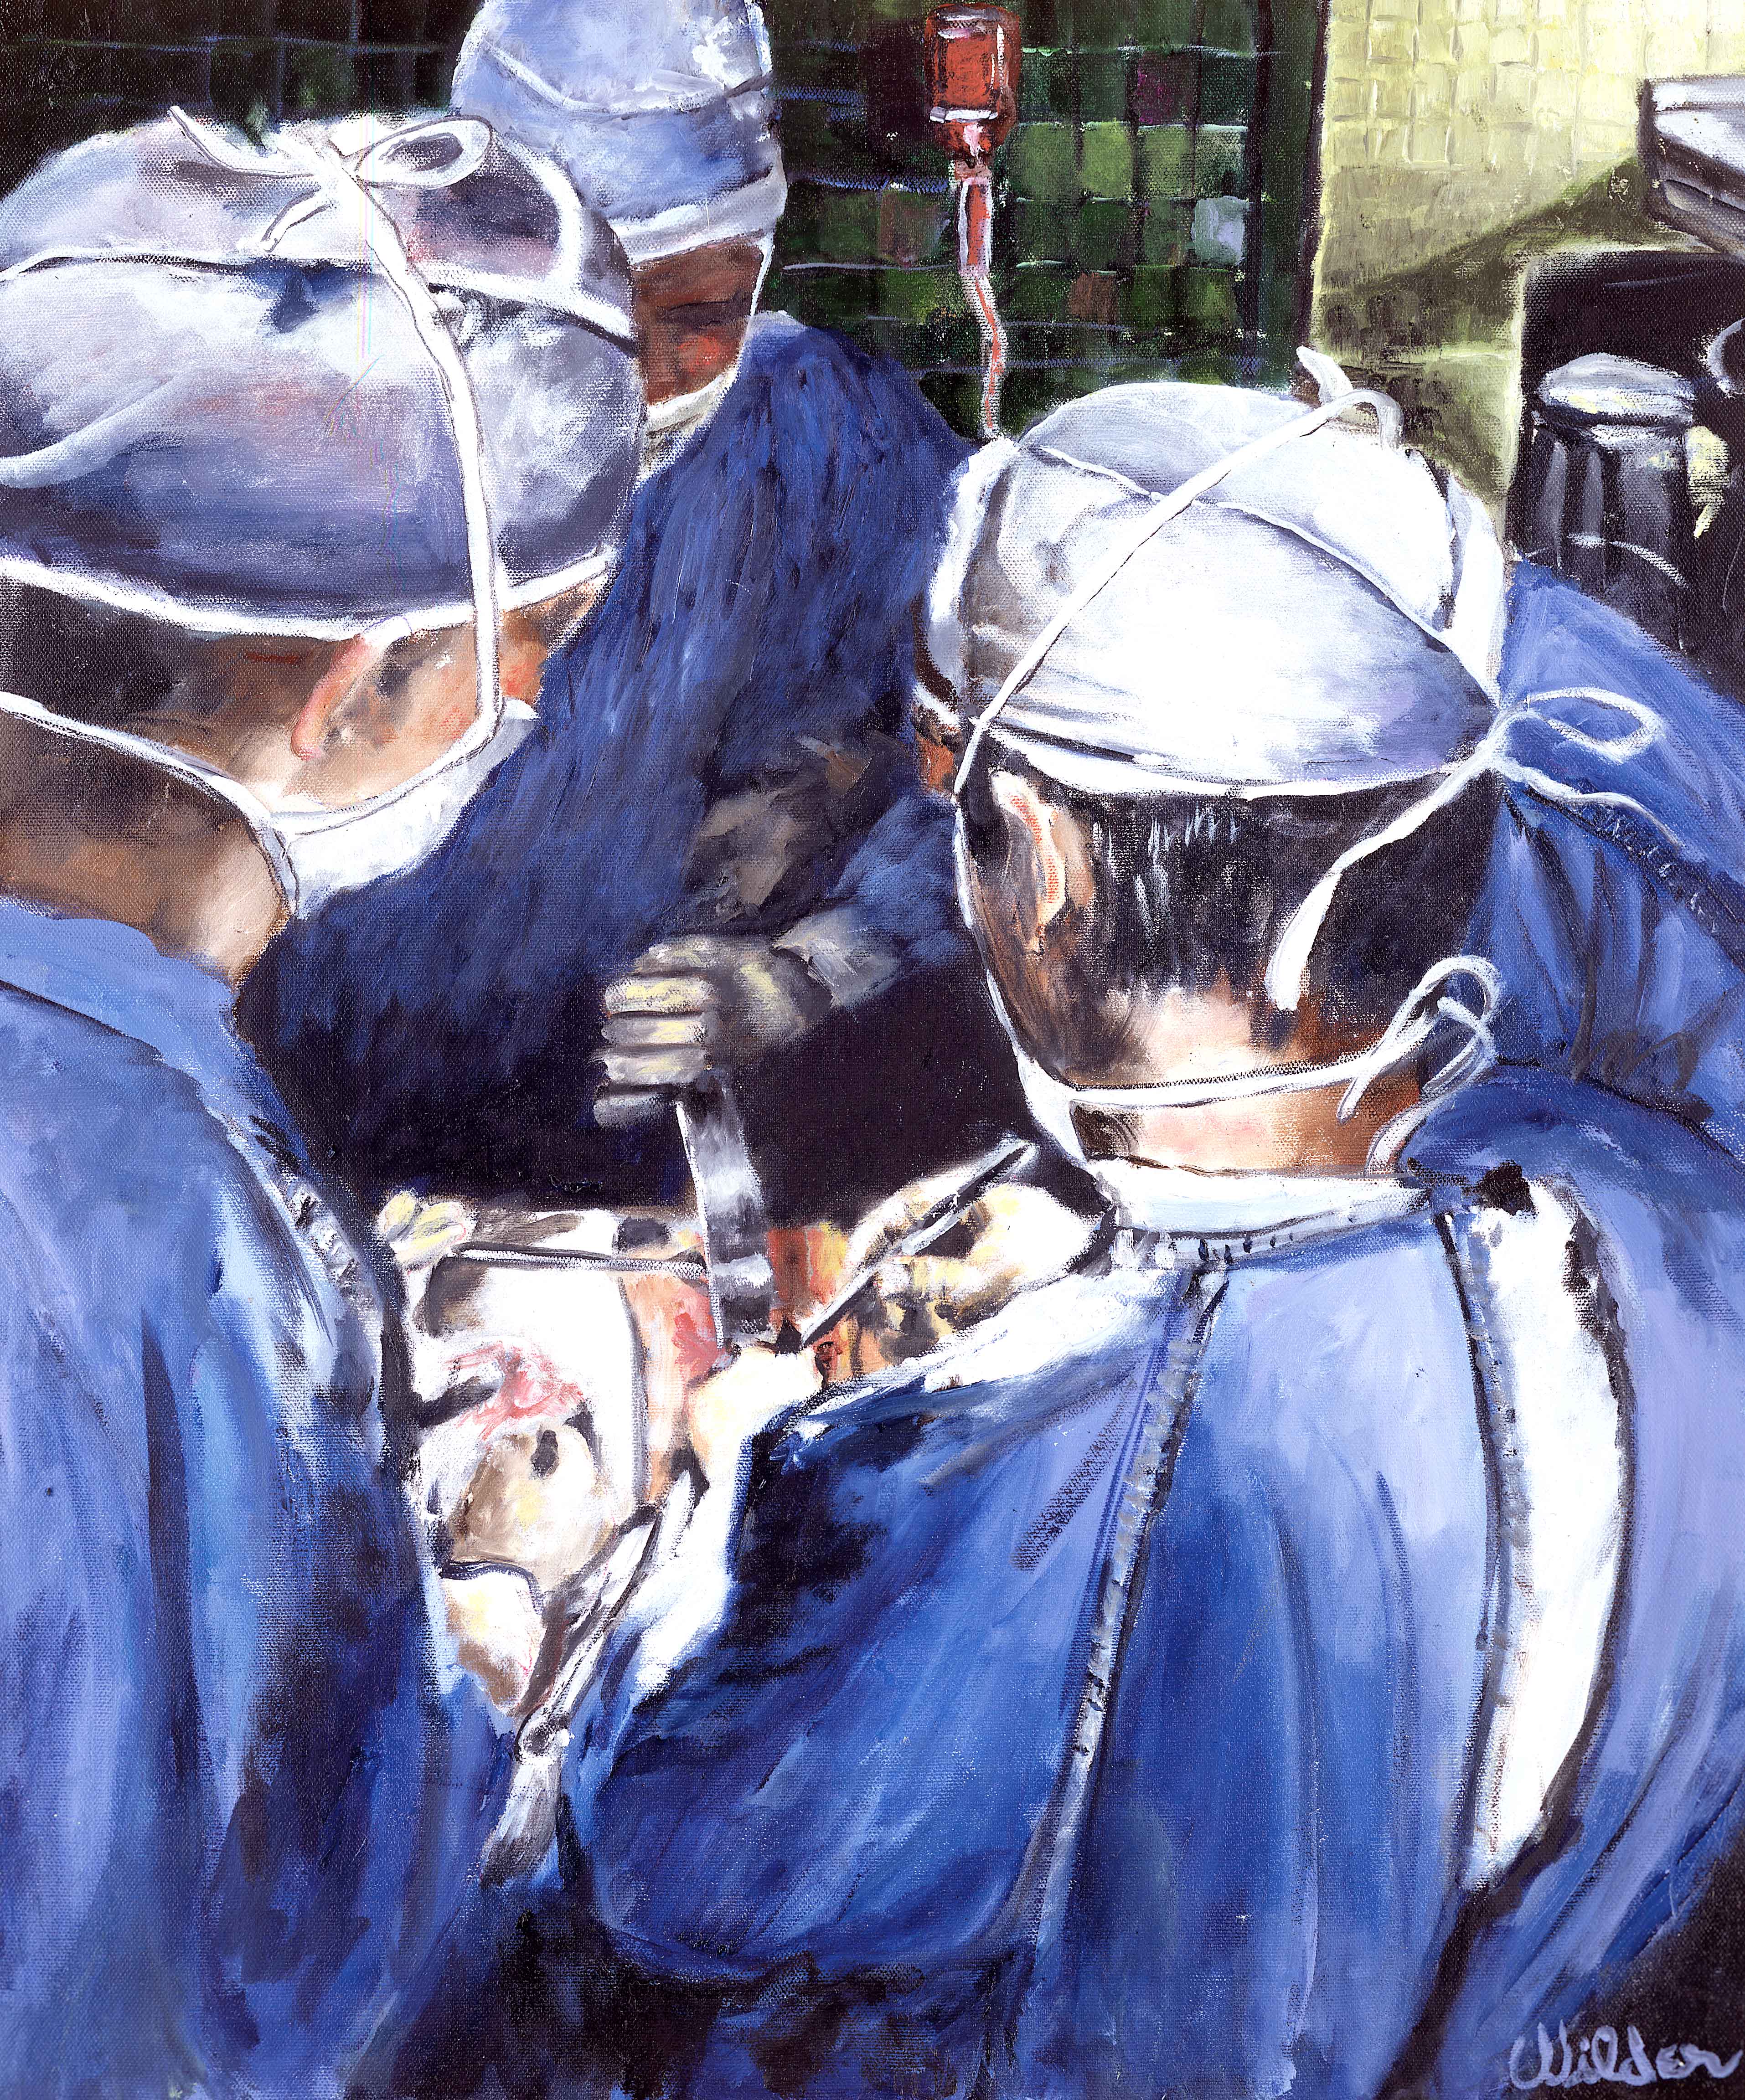 Surgeons Deep In Surgery